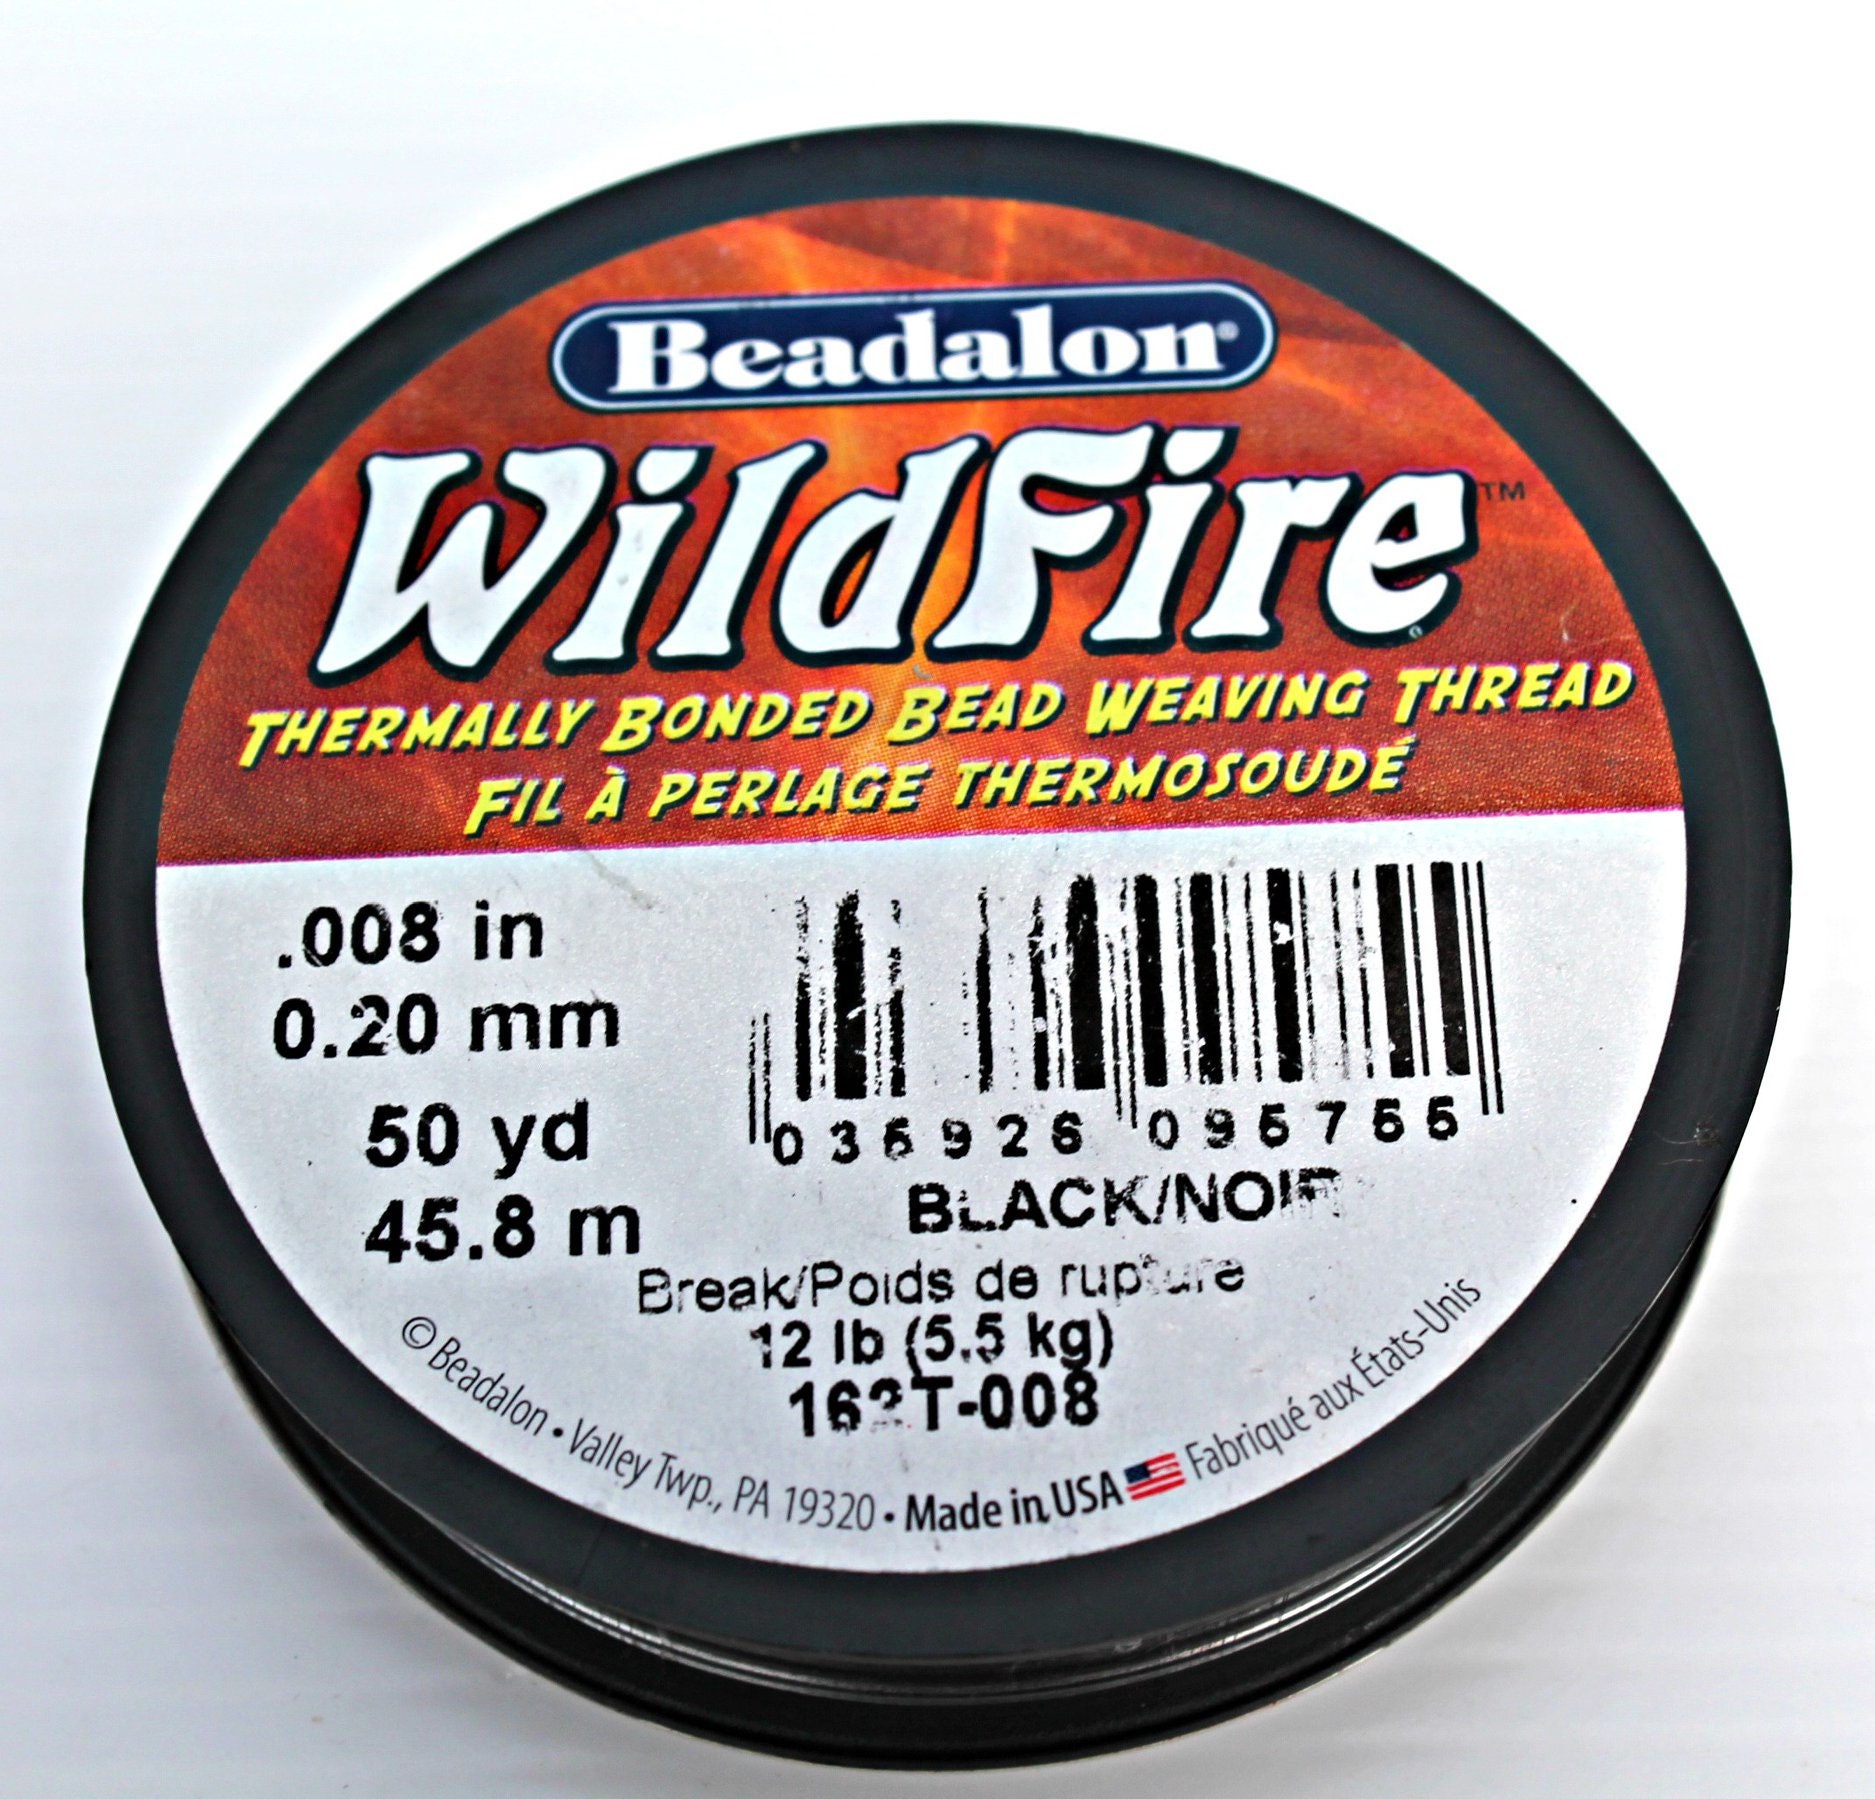 Beadalon Gray Wildfire Beading Thread .008in - 20 Yard Spool